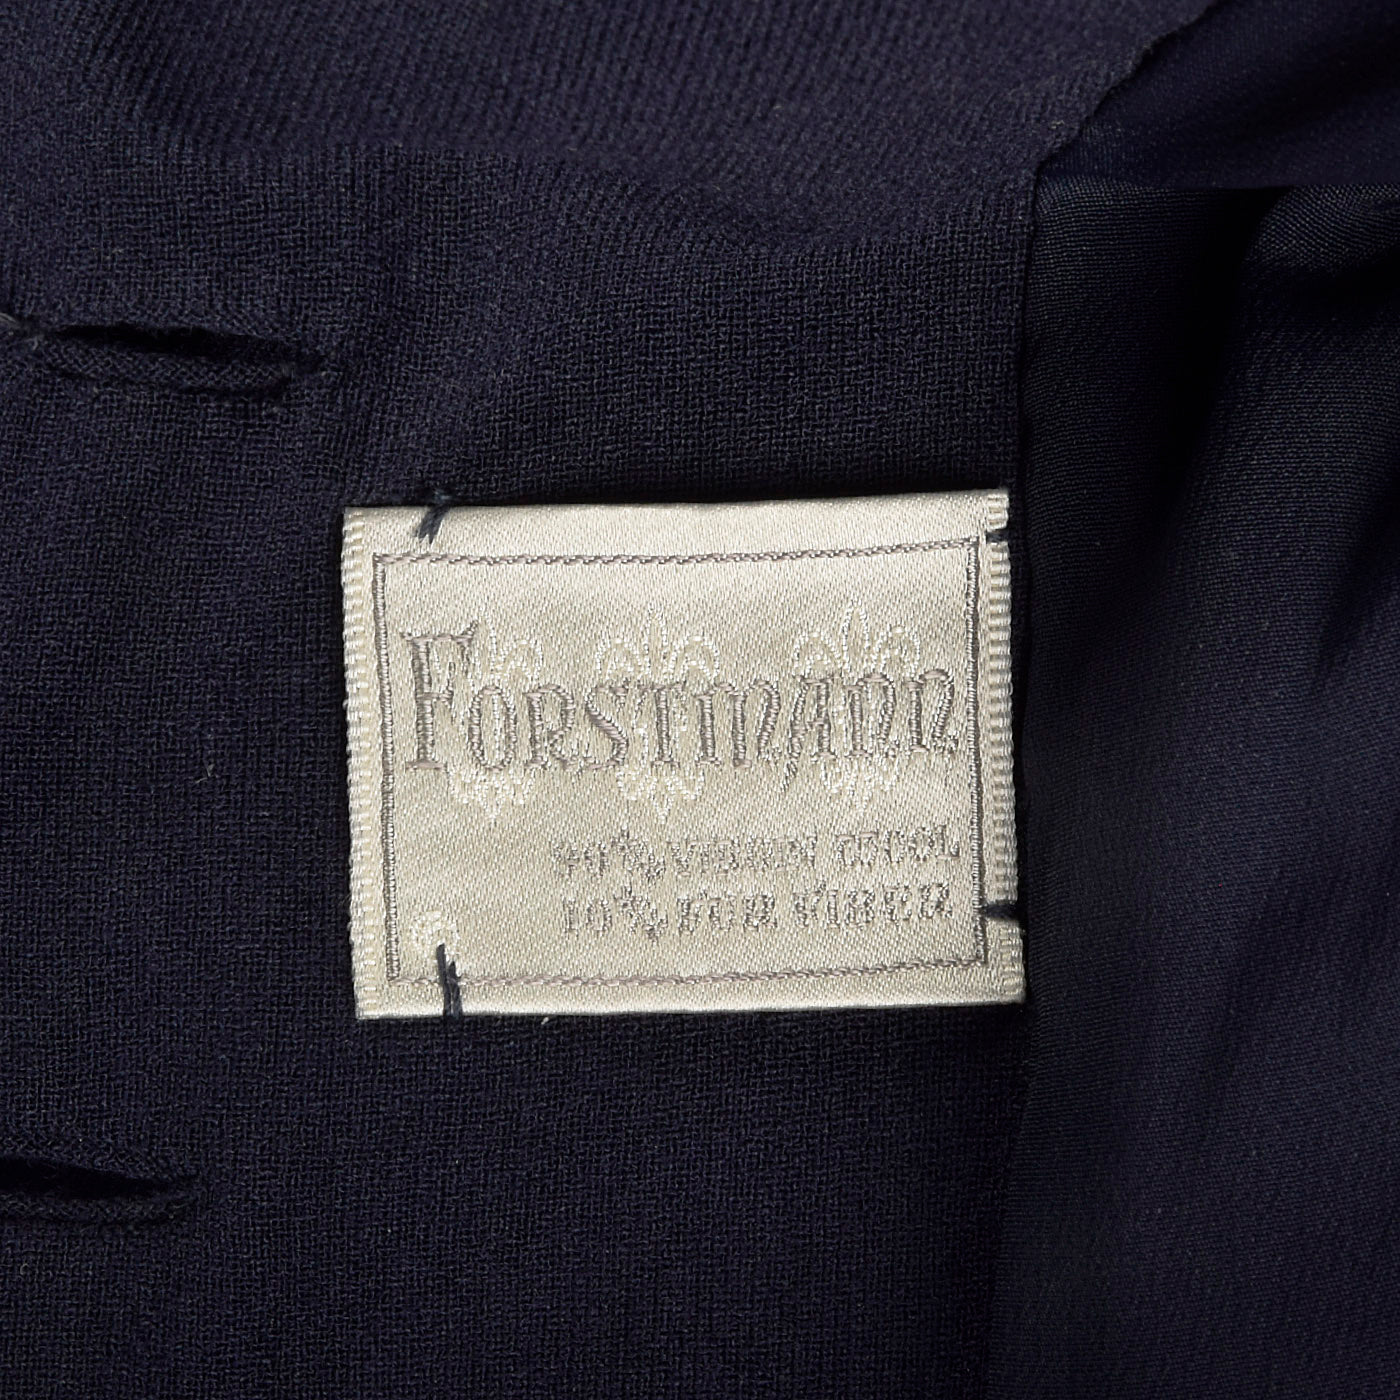 1950s Navy Blue Wool Jacket with Asymmetric Bow at Hem